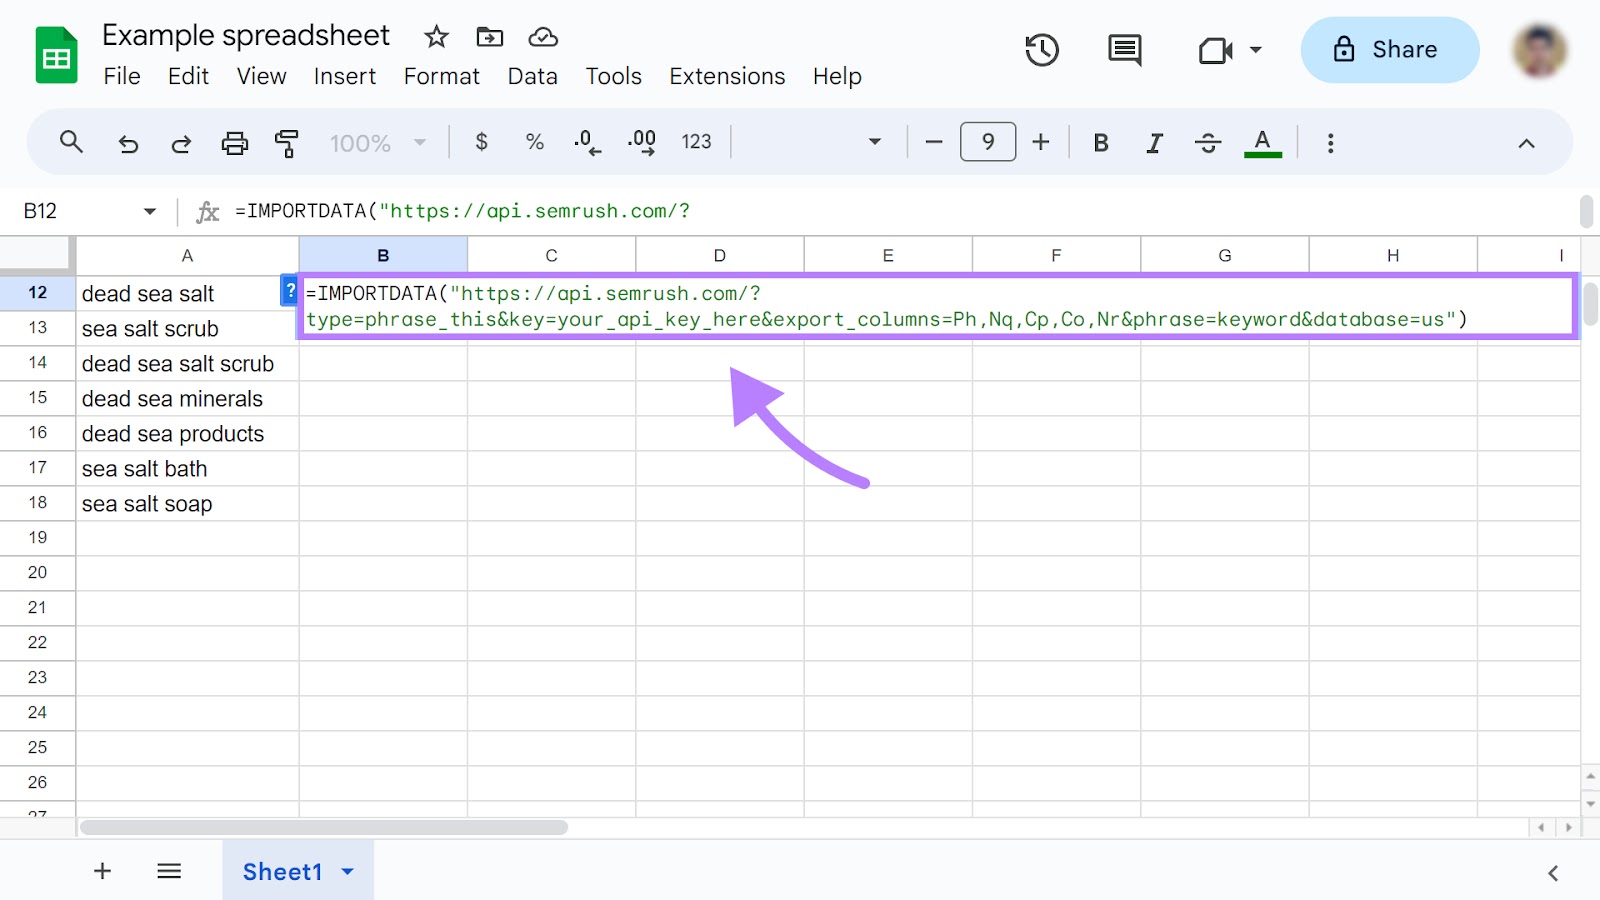 An example Google Sheets spreadsheet